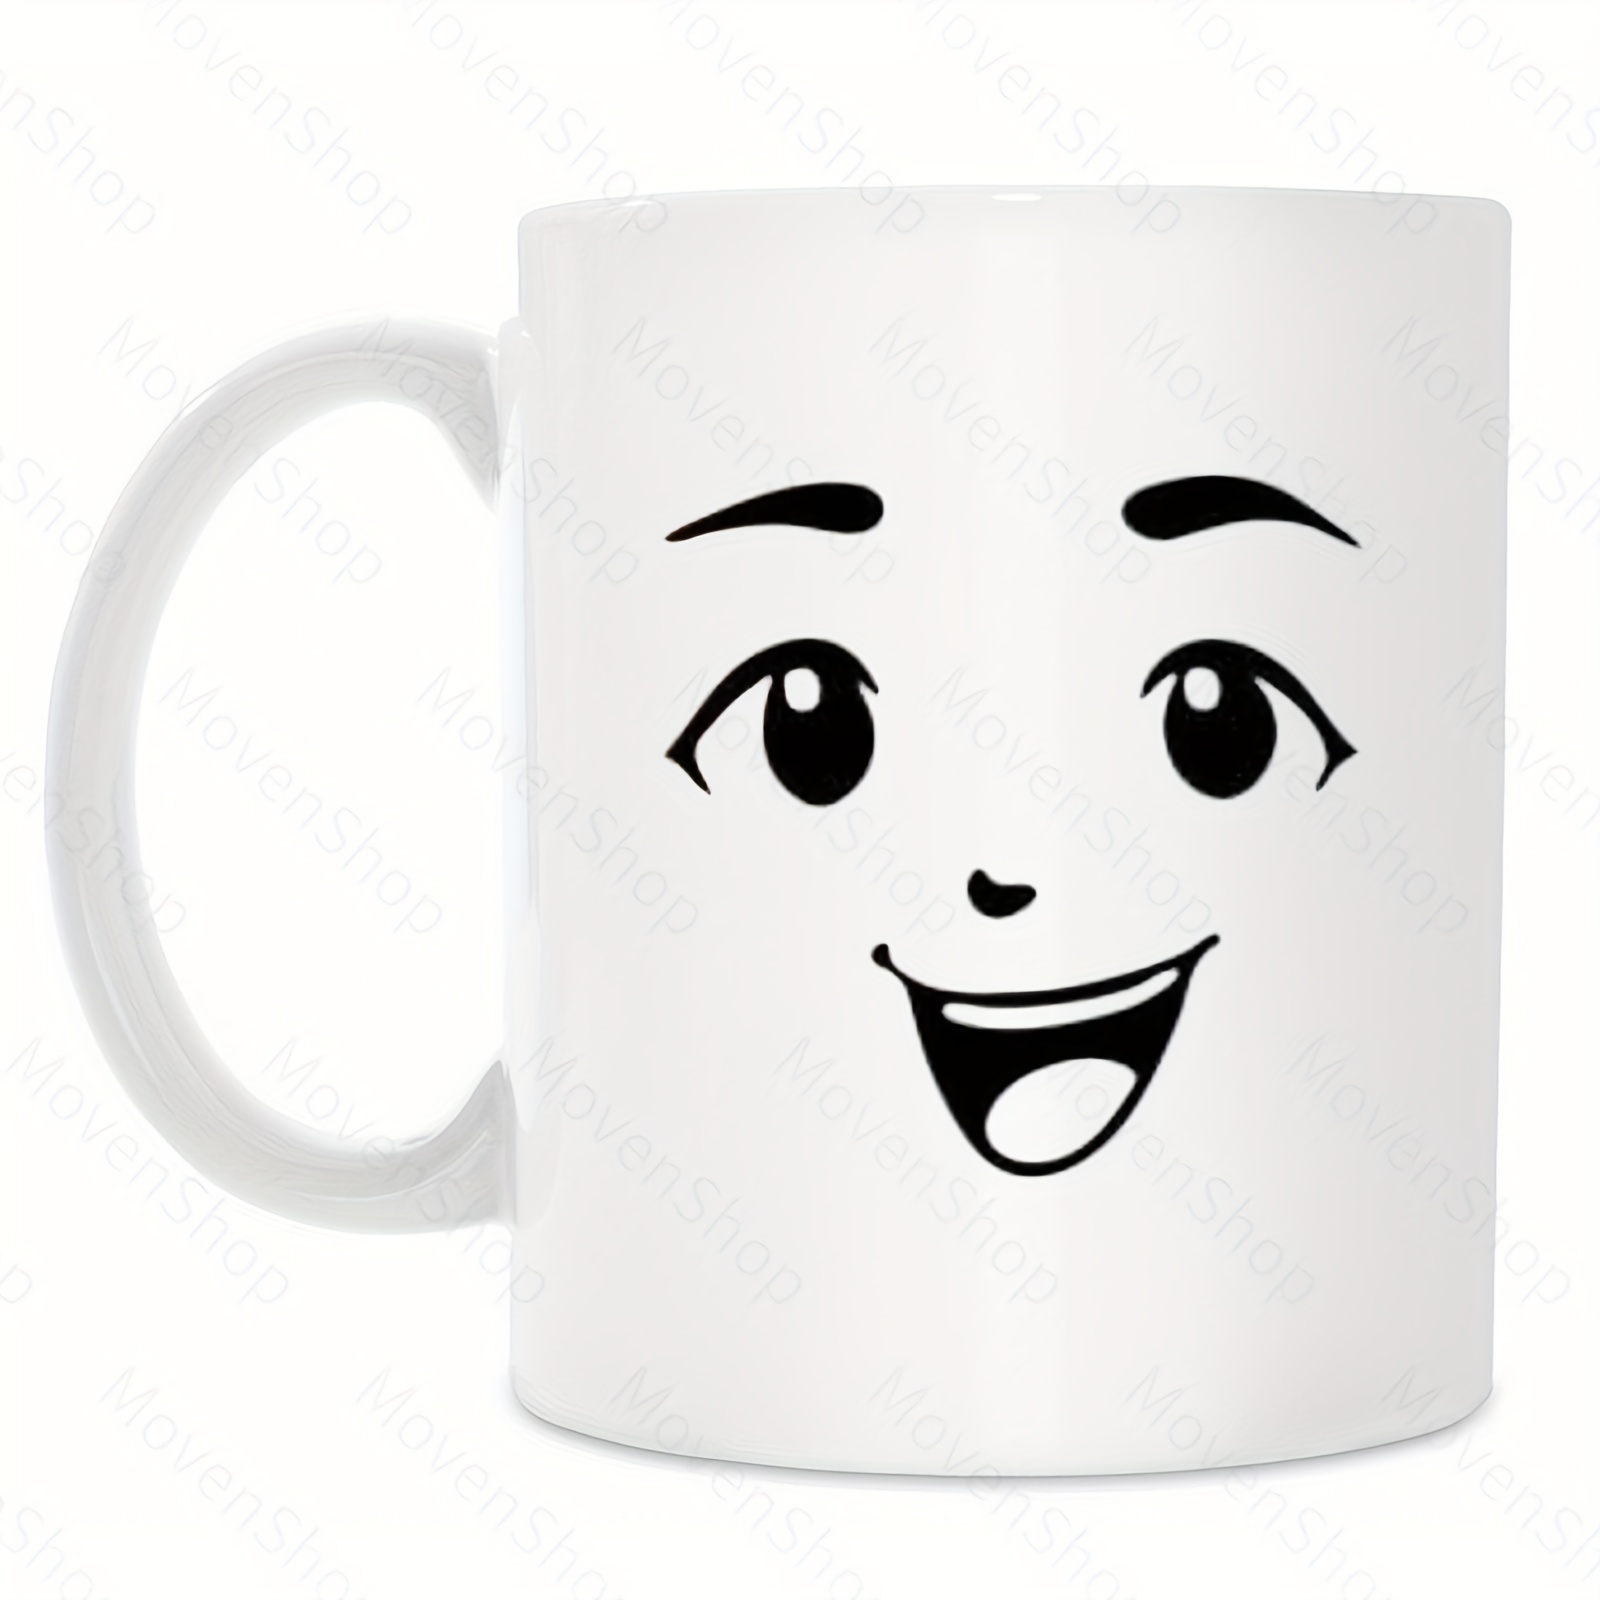 white tea cup cartoon